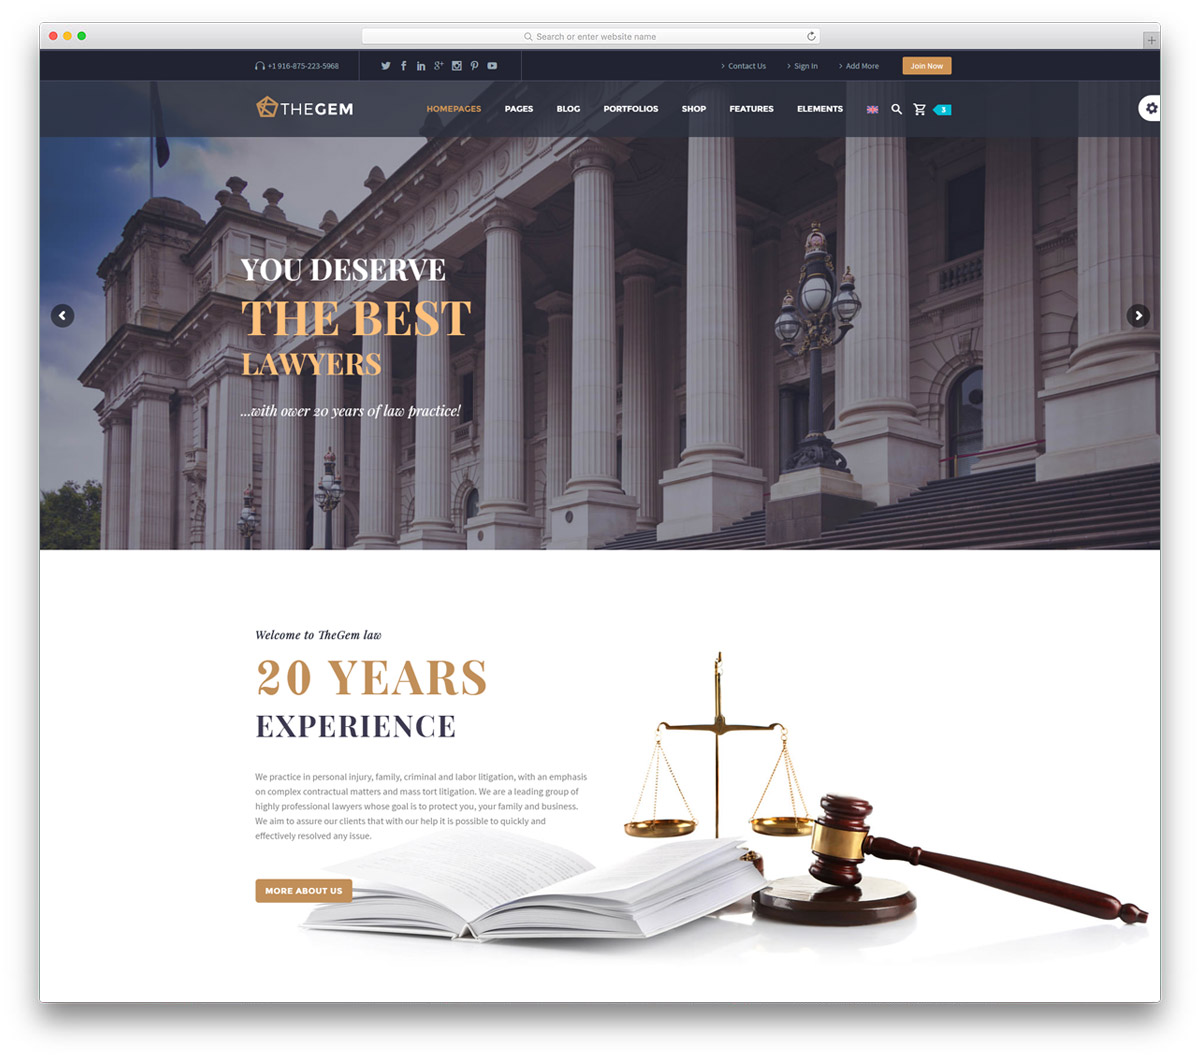 TheGem - popular WordPress theme for lawyers